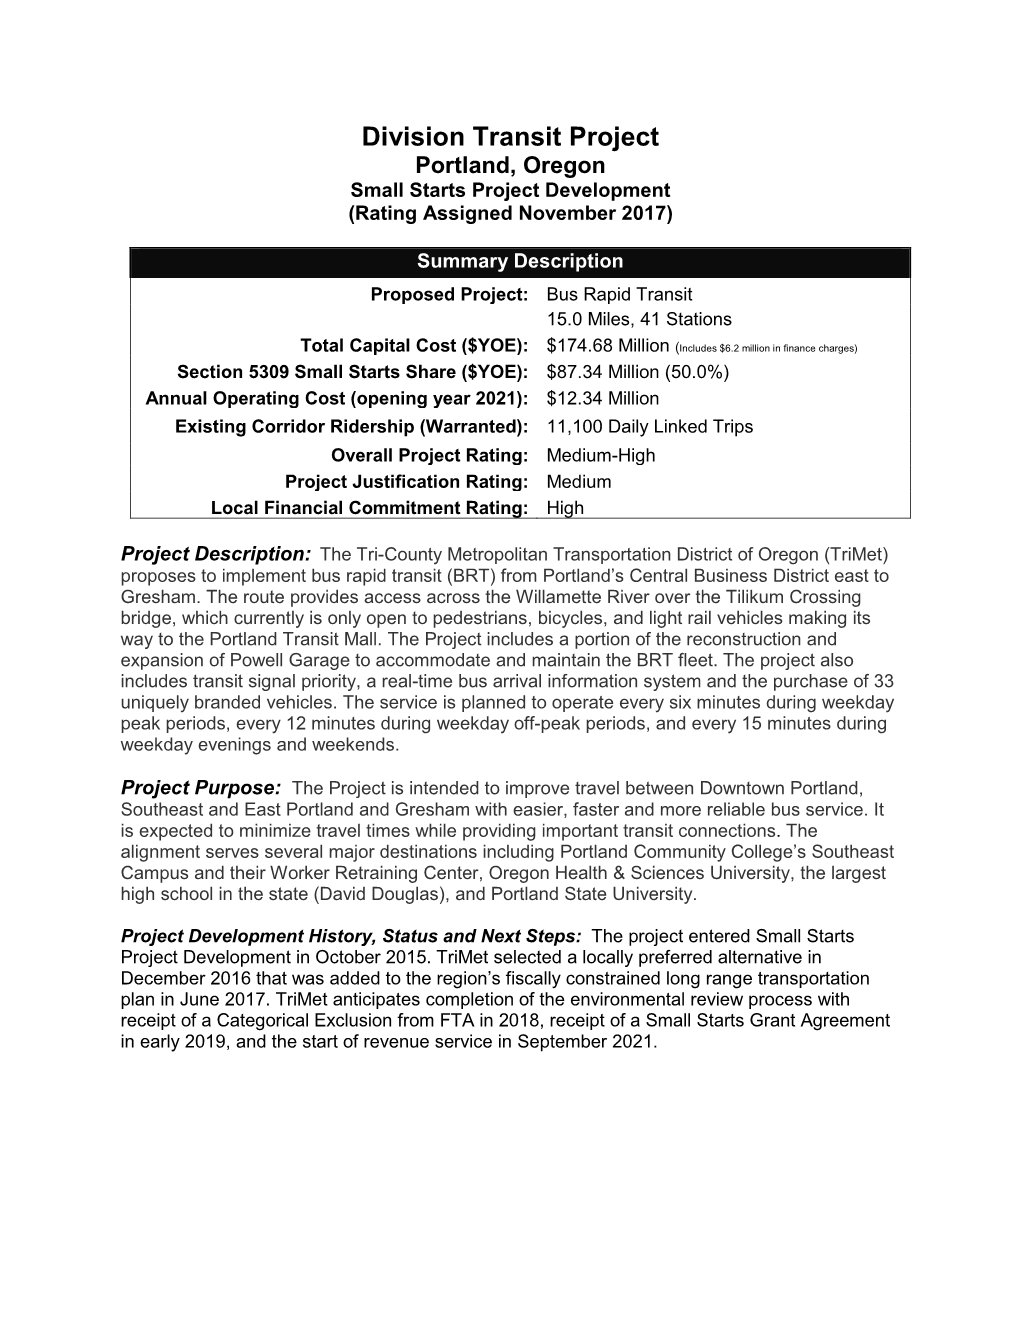 Division Transit Project Portland, Oregon Small Starts Project Development (Rating Assigned November 2017)